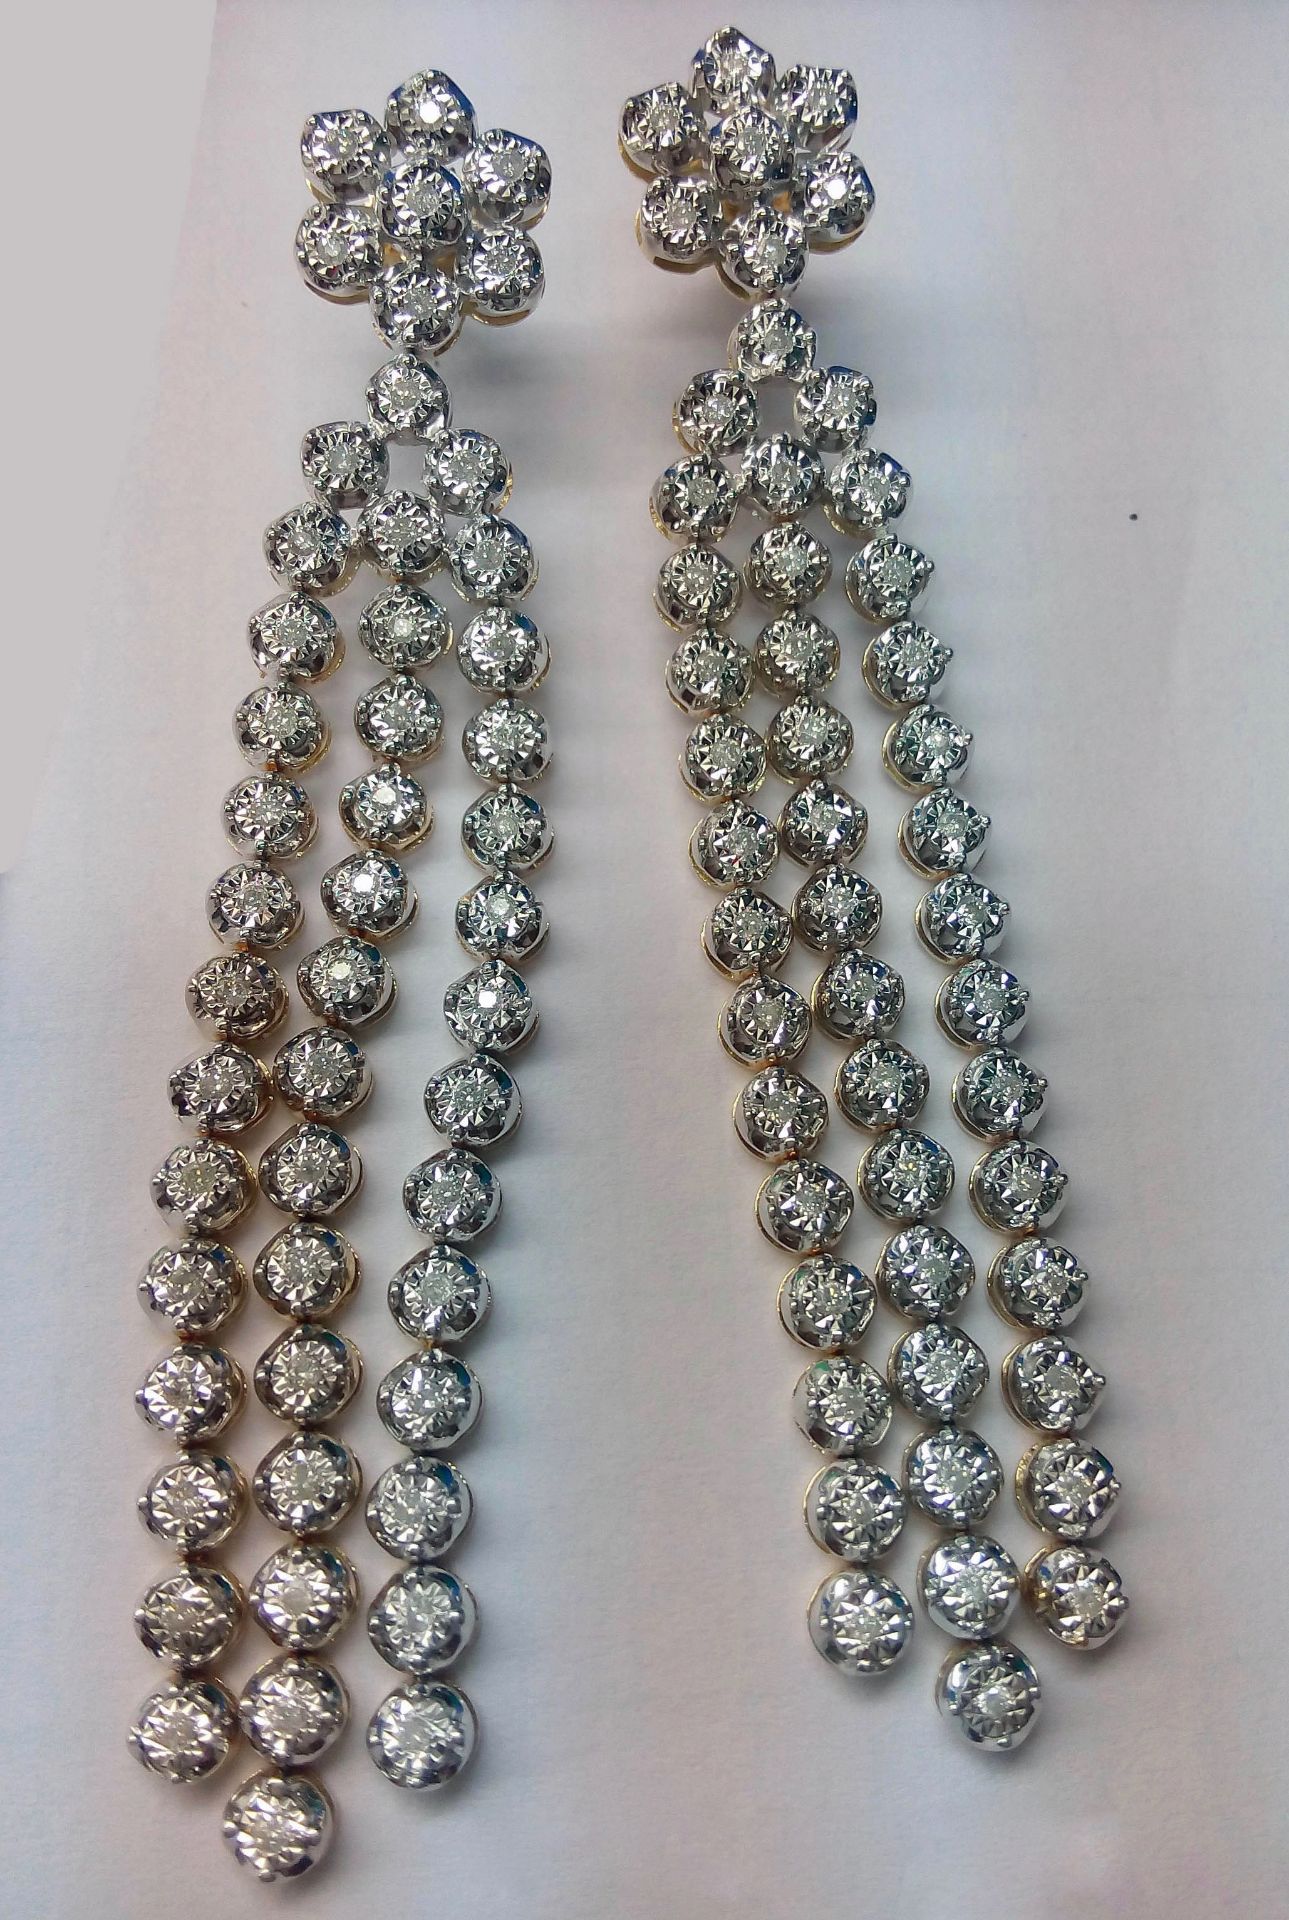 1ct Diamond/18K Yellow Gold Earrings,100 individual stones